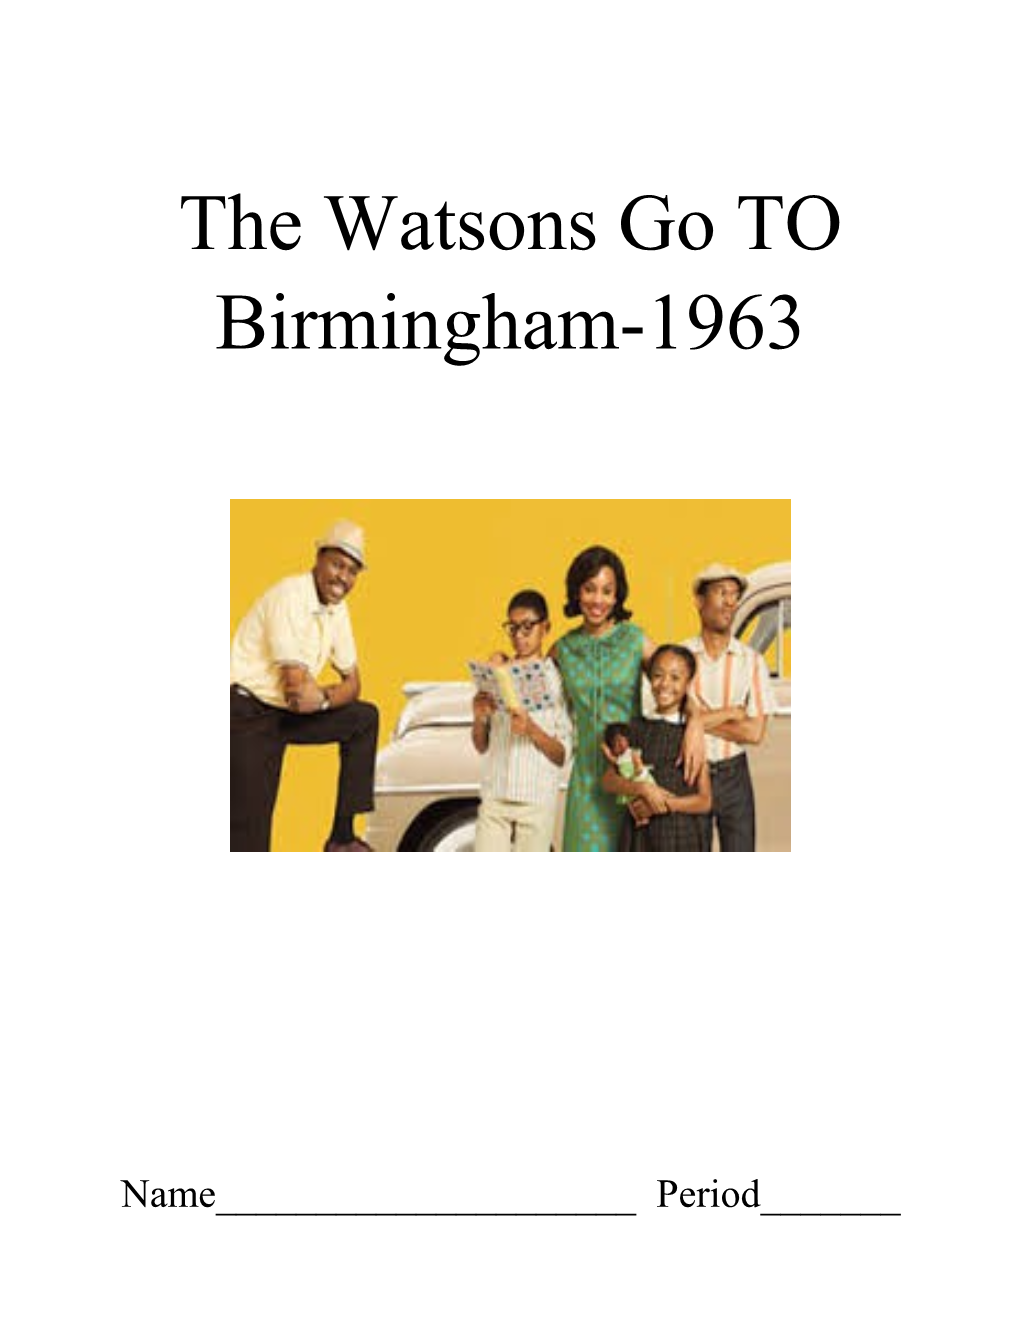 The Watsons Go to Birmingham-1963 s3